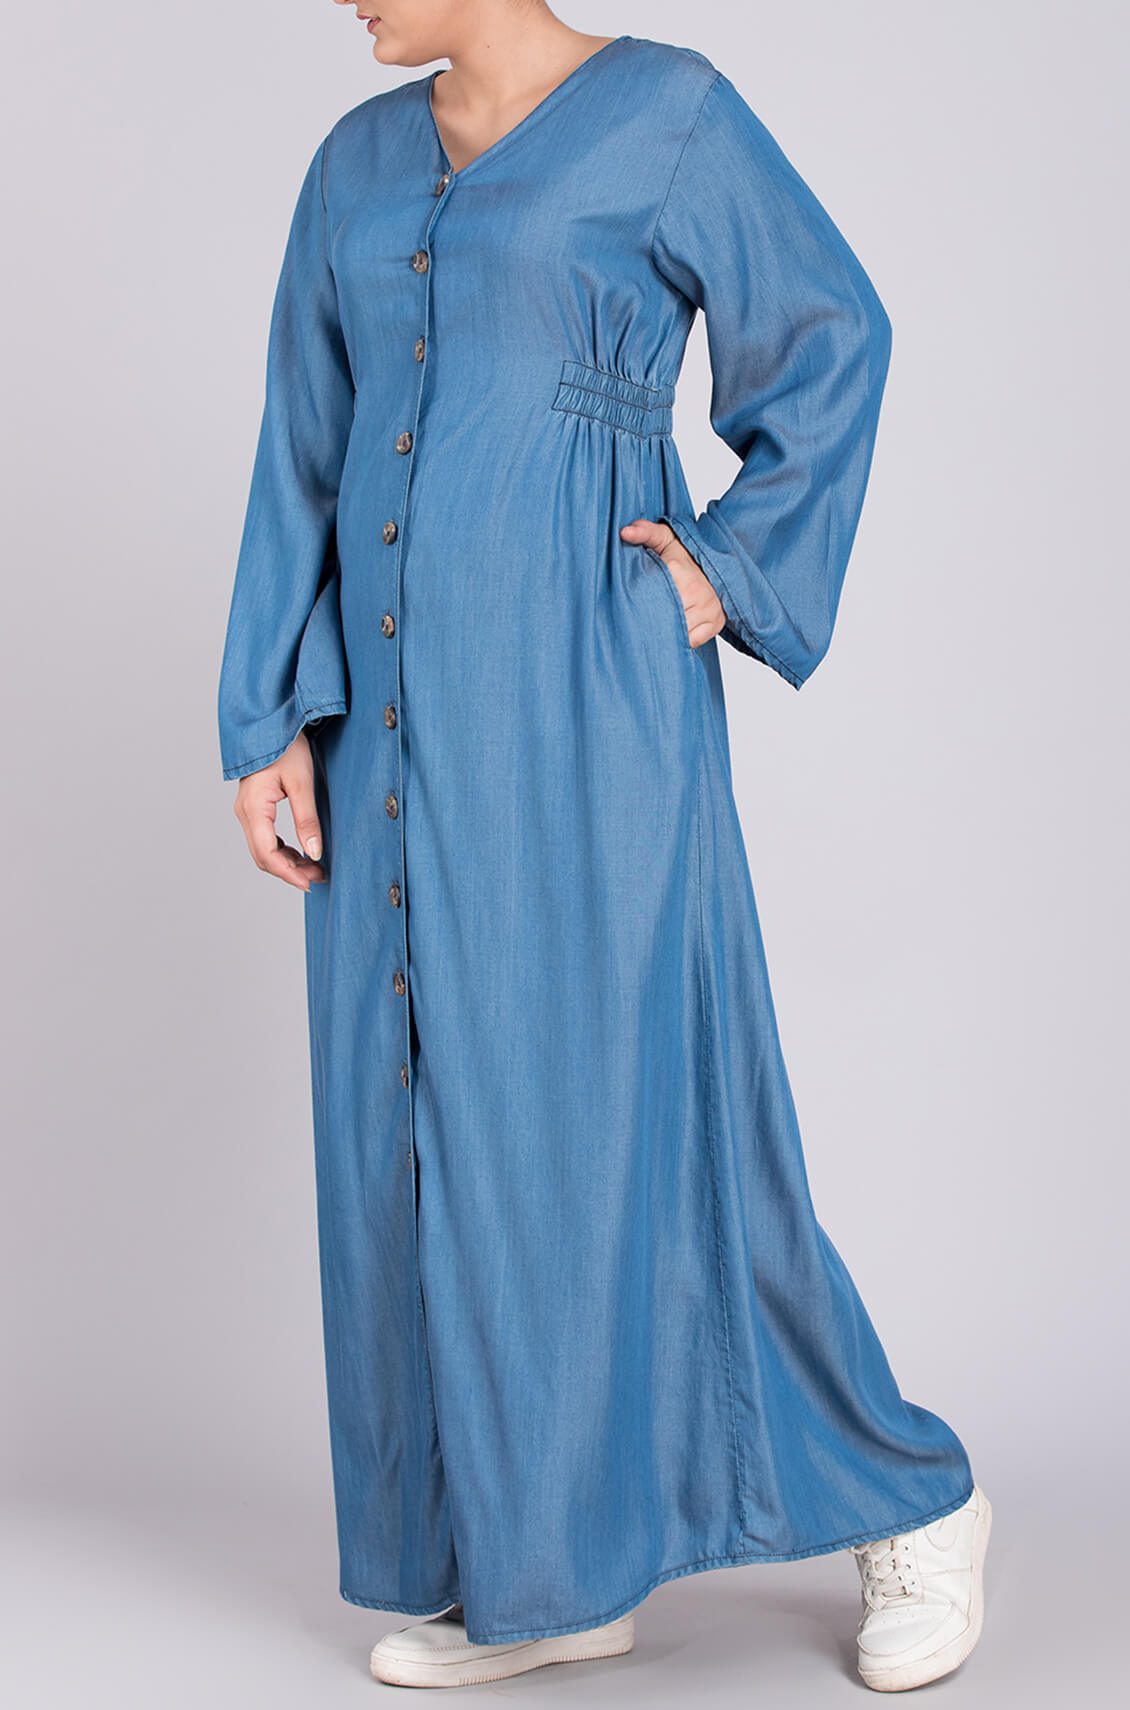 Buy Silk Route� Detachable Hoodie Deep Blue Denim Abaya Denim Urban Maxi  Dress Jilbab Small 56 at Amazon.in